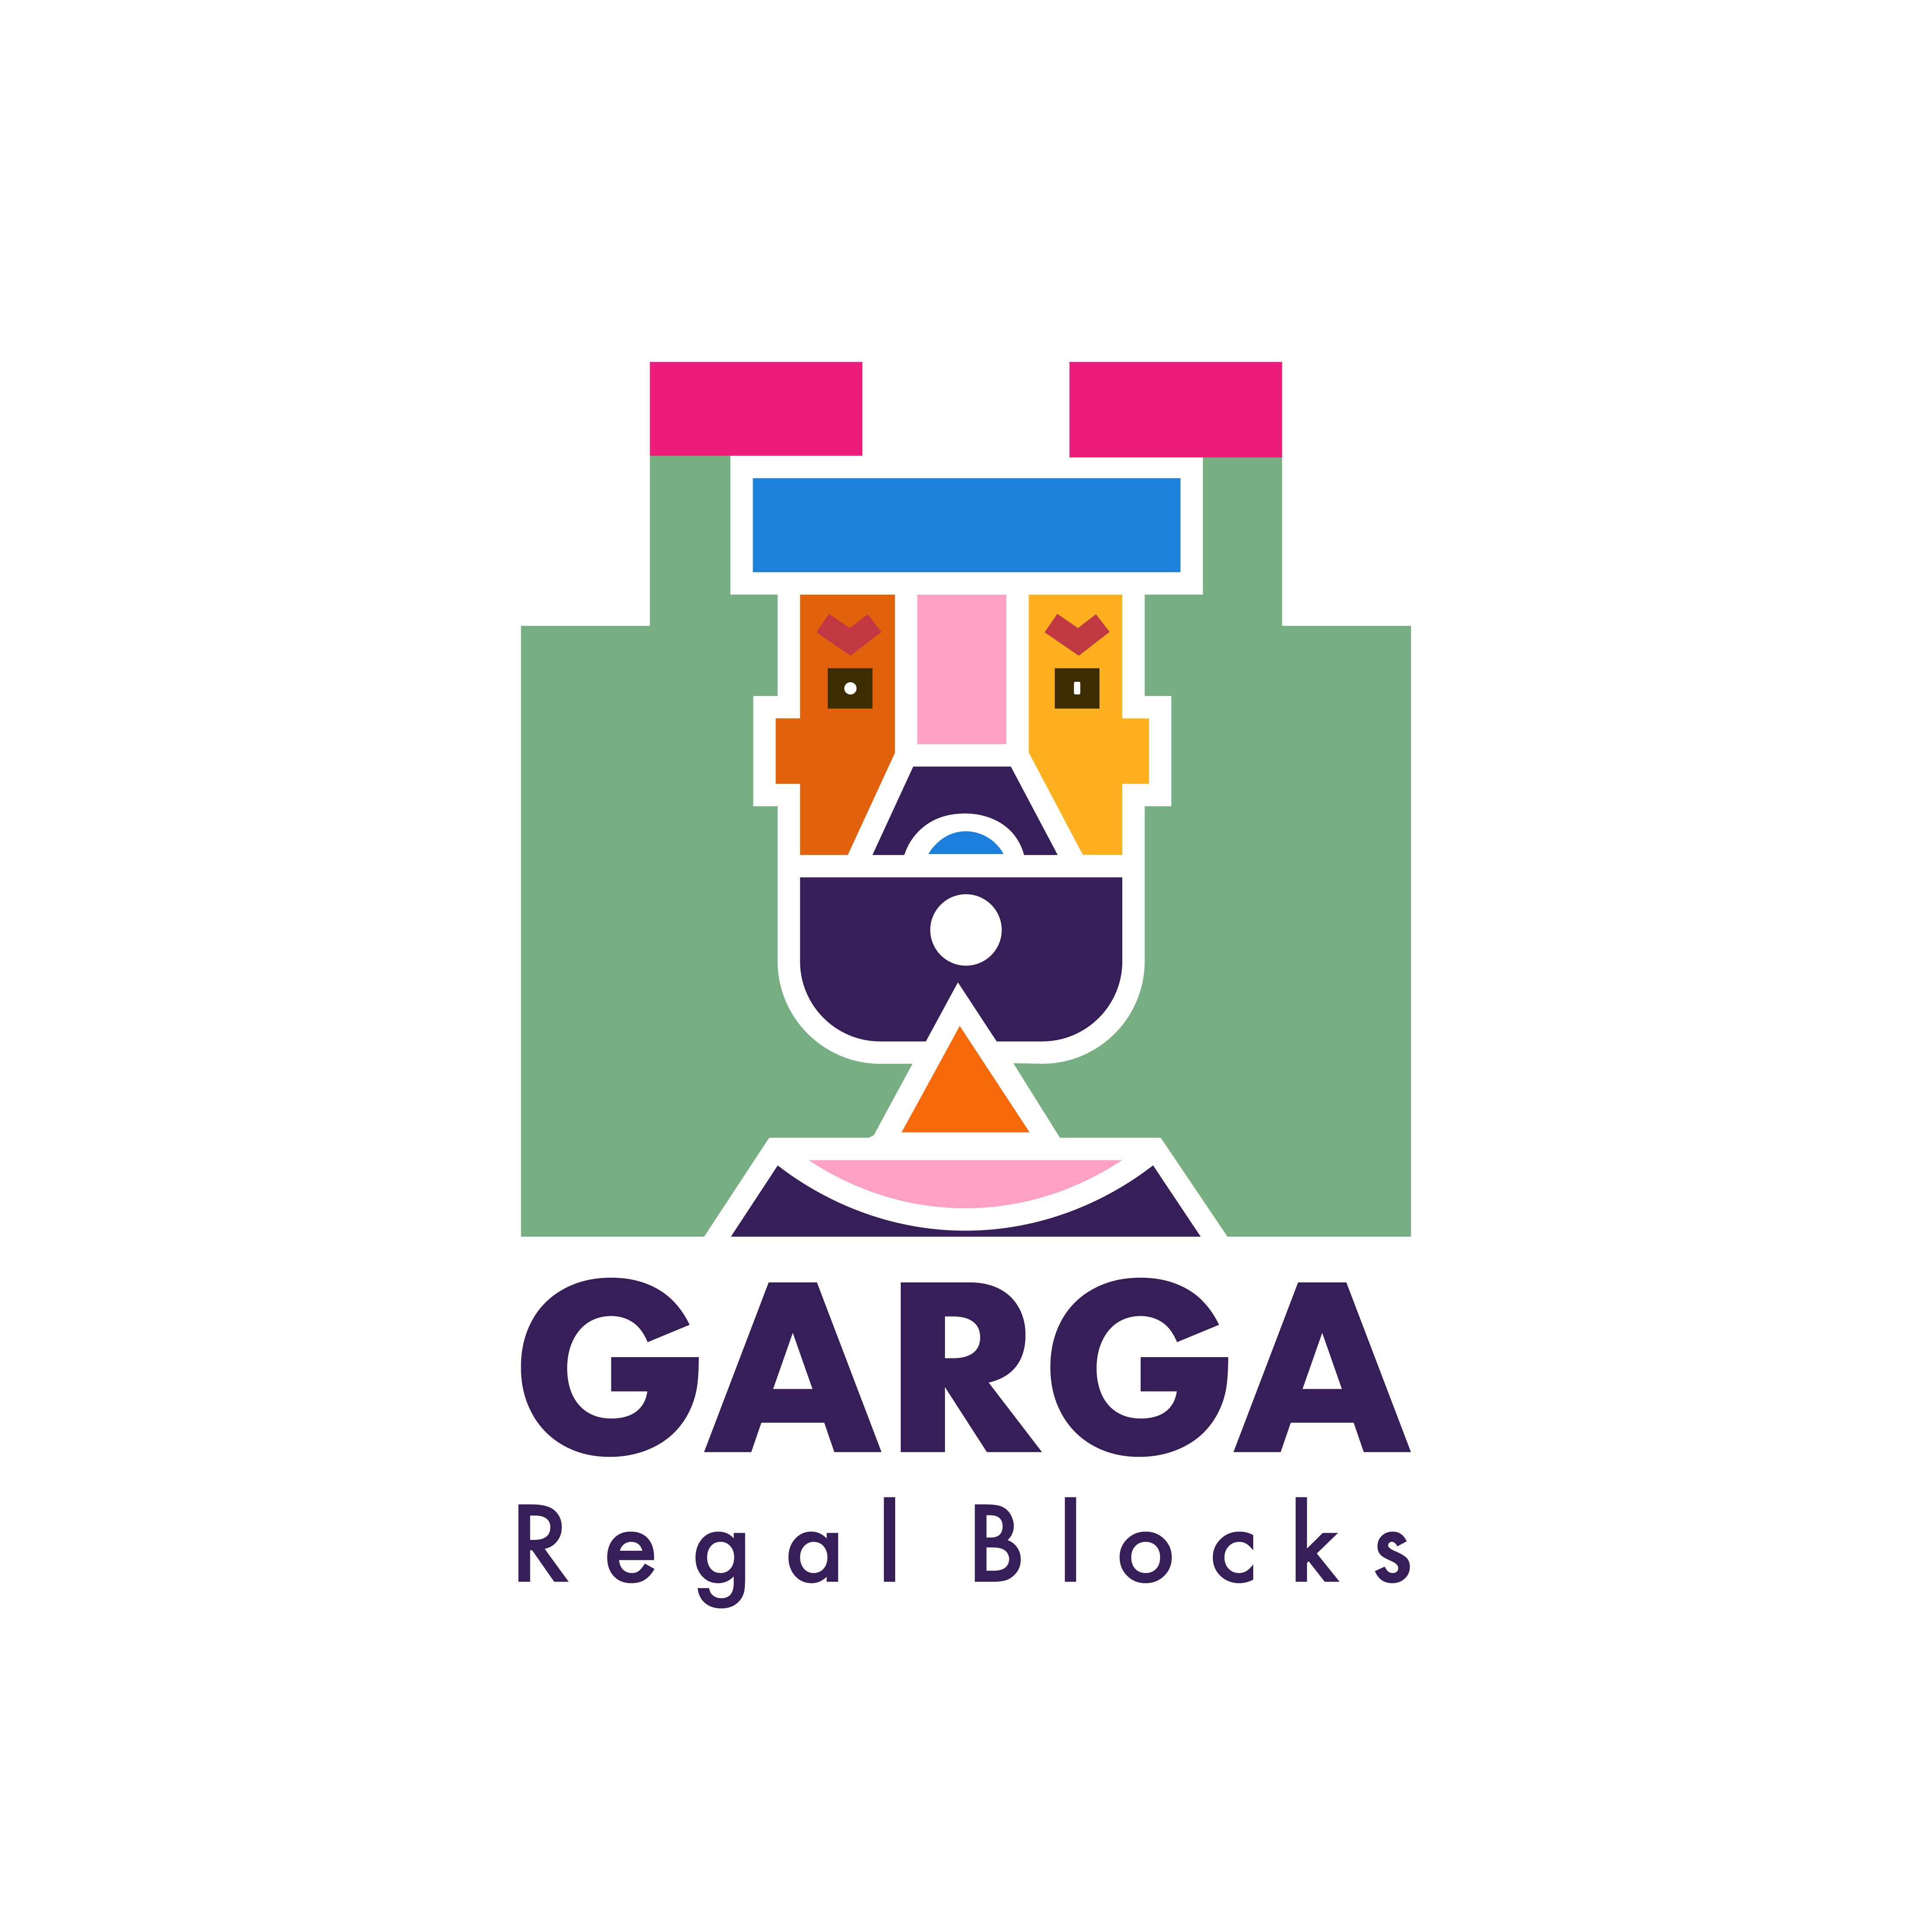 Garga Regal Blocks